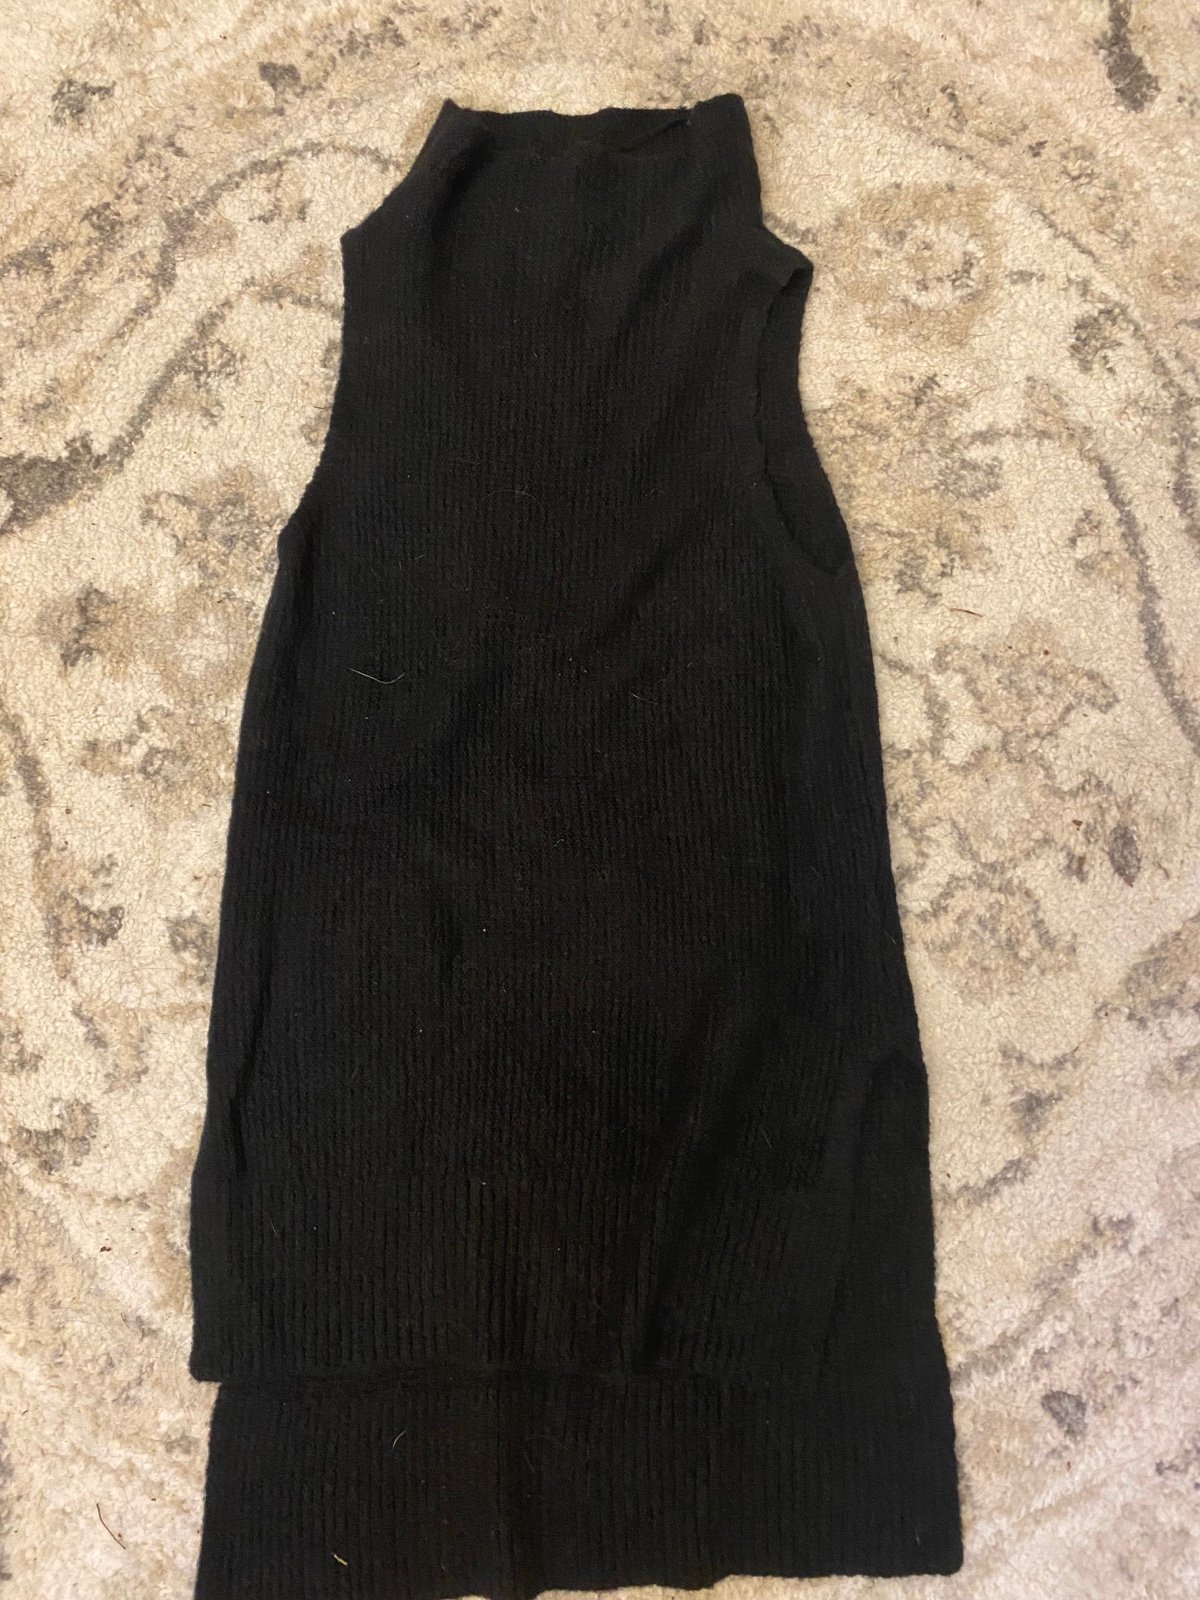 Classic Black Size Small Sweater Vest Sleeveless KO3S4jfkC High Quaity